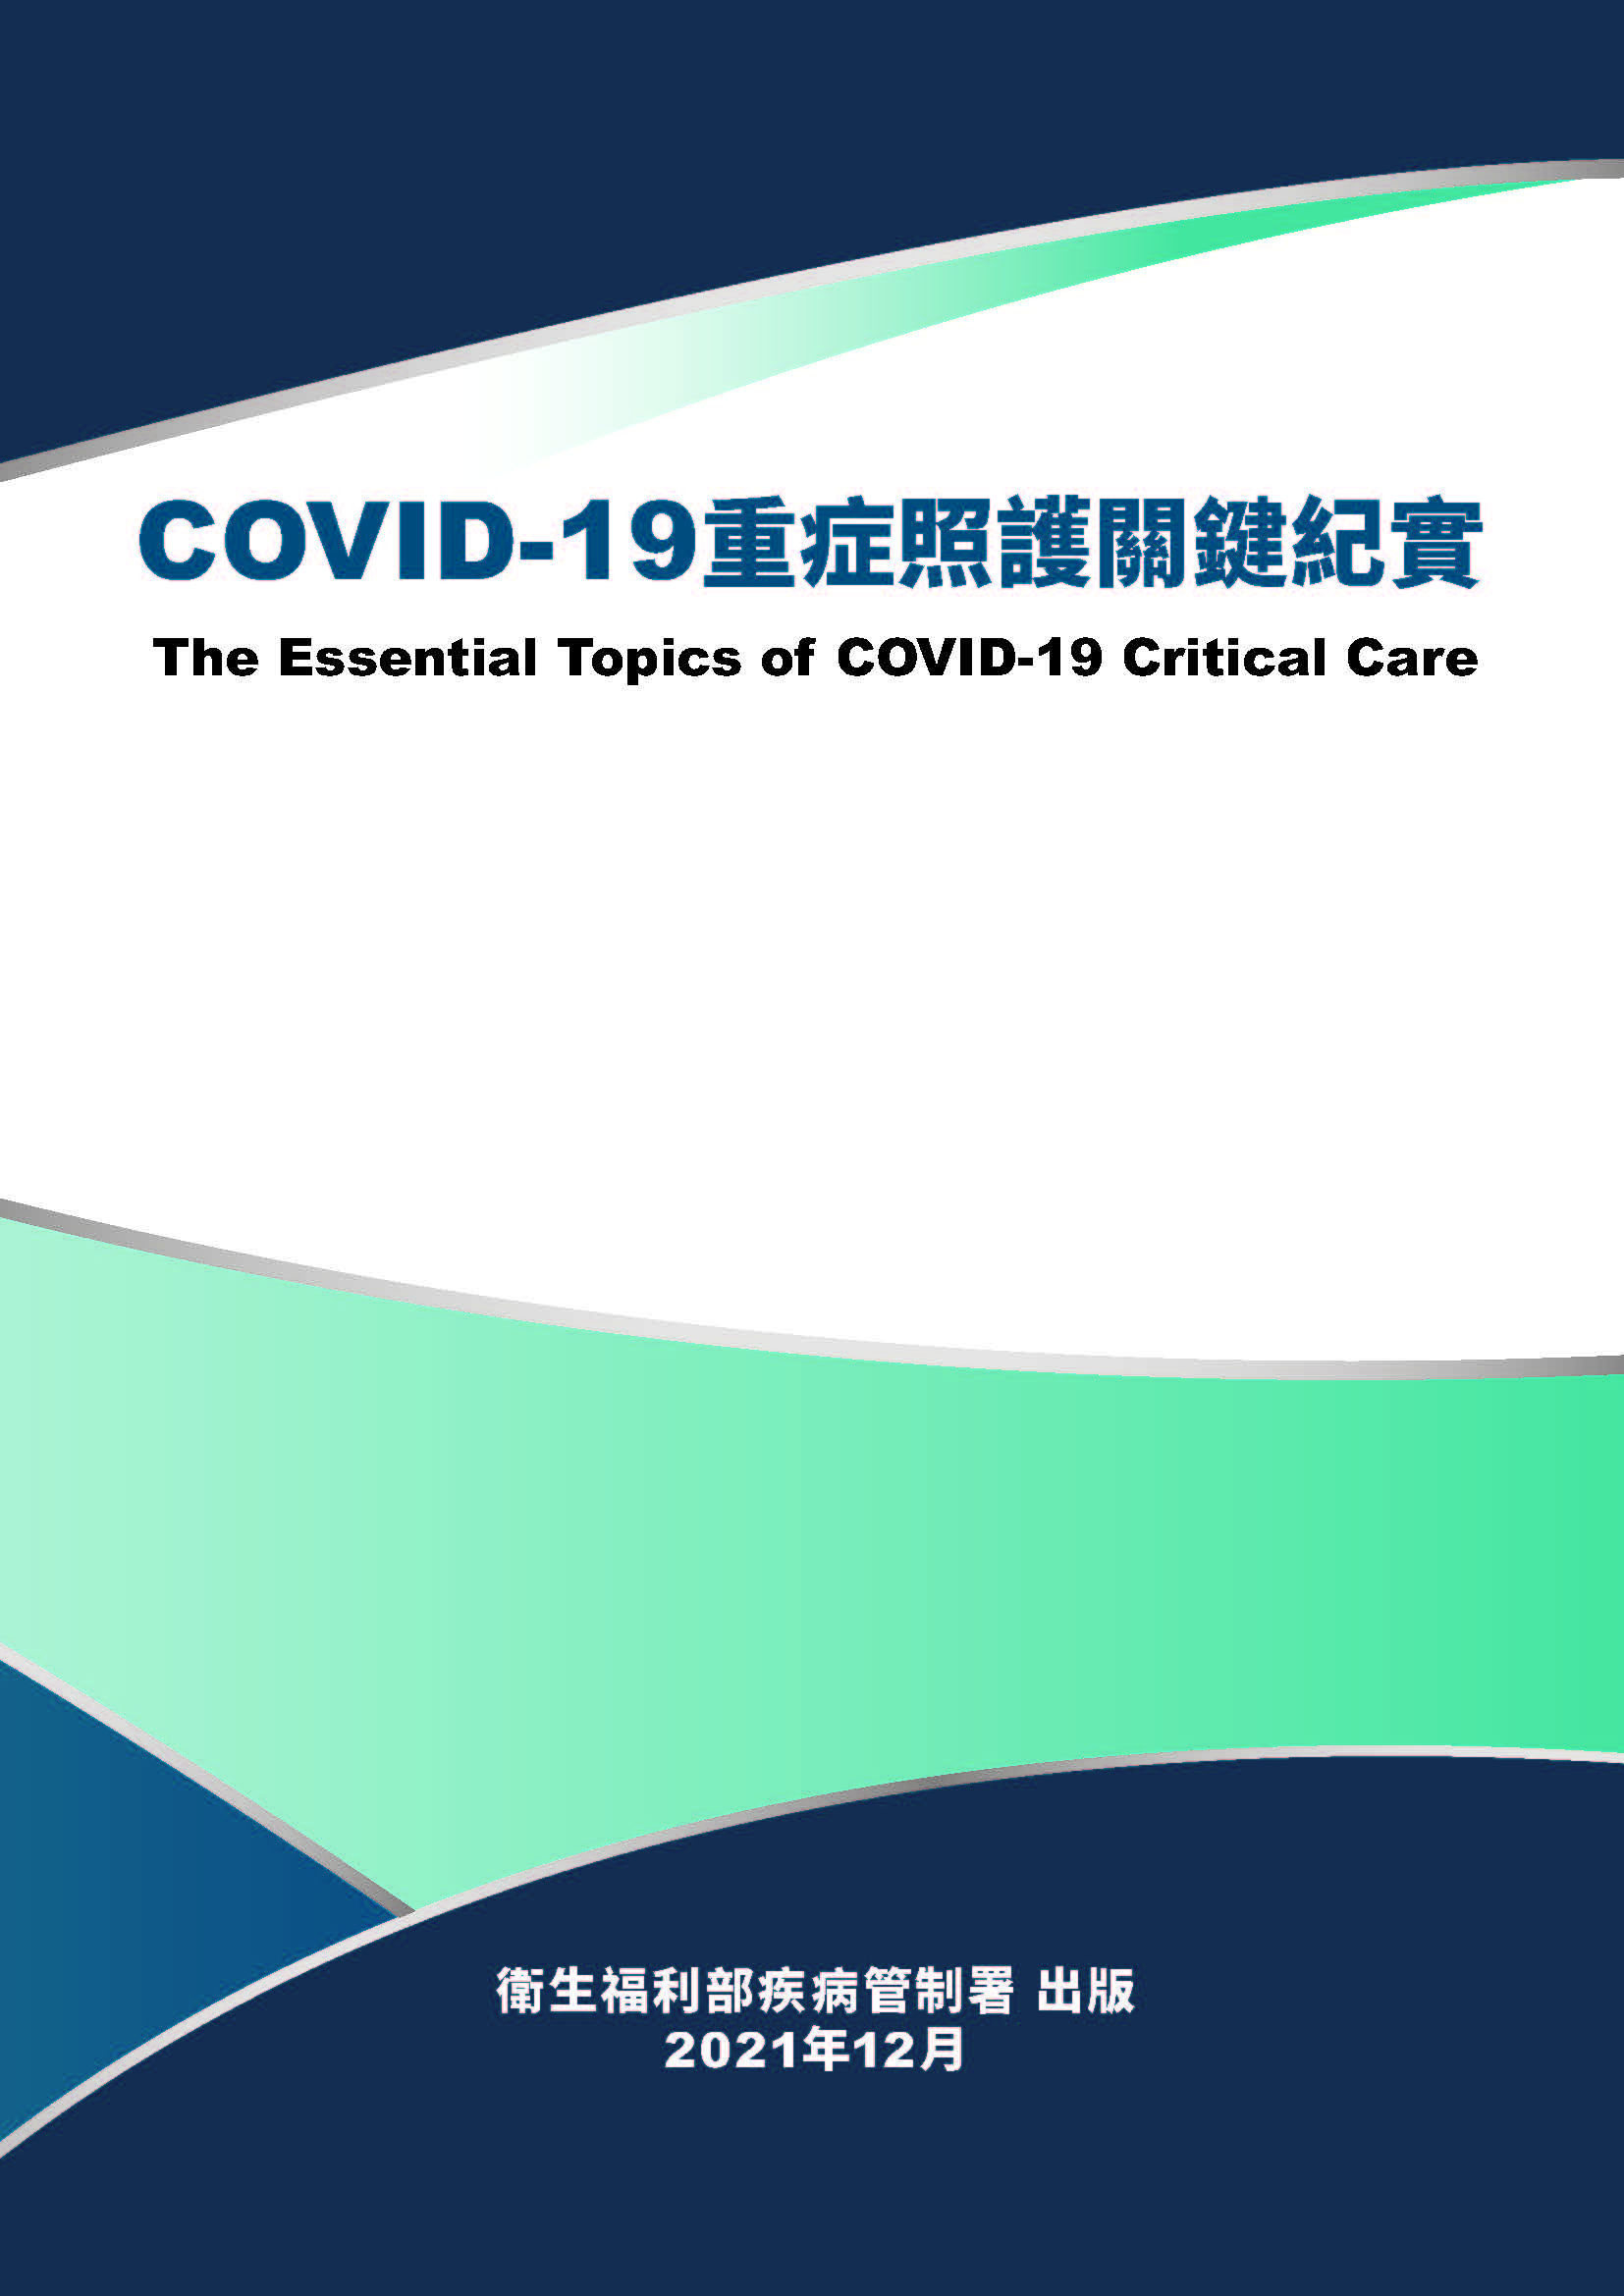 The Essential Topics of COVID-19 Critical Care